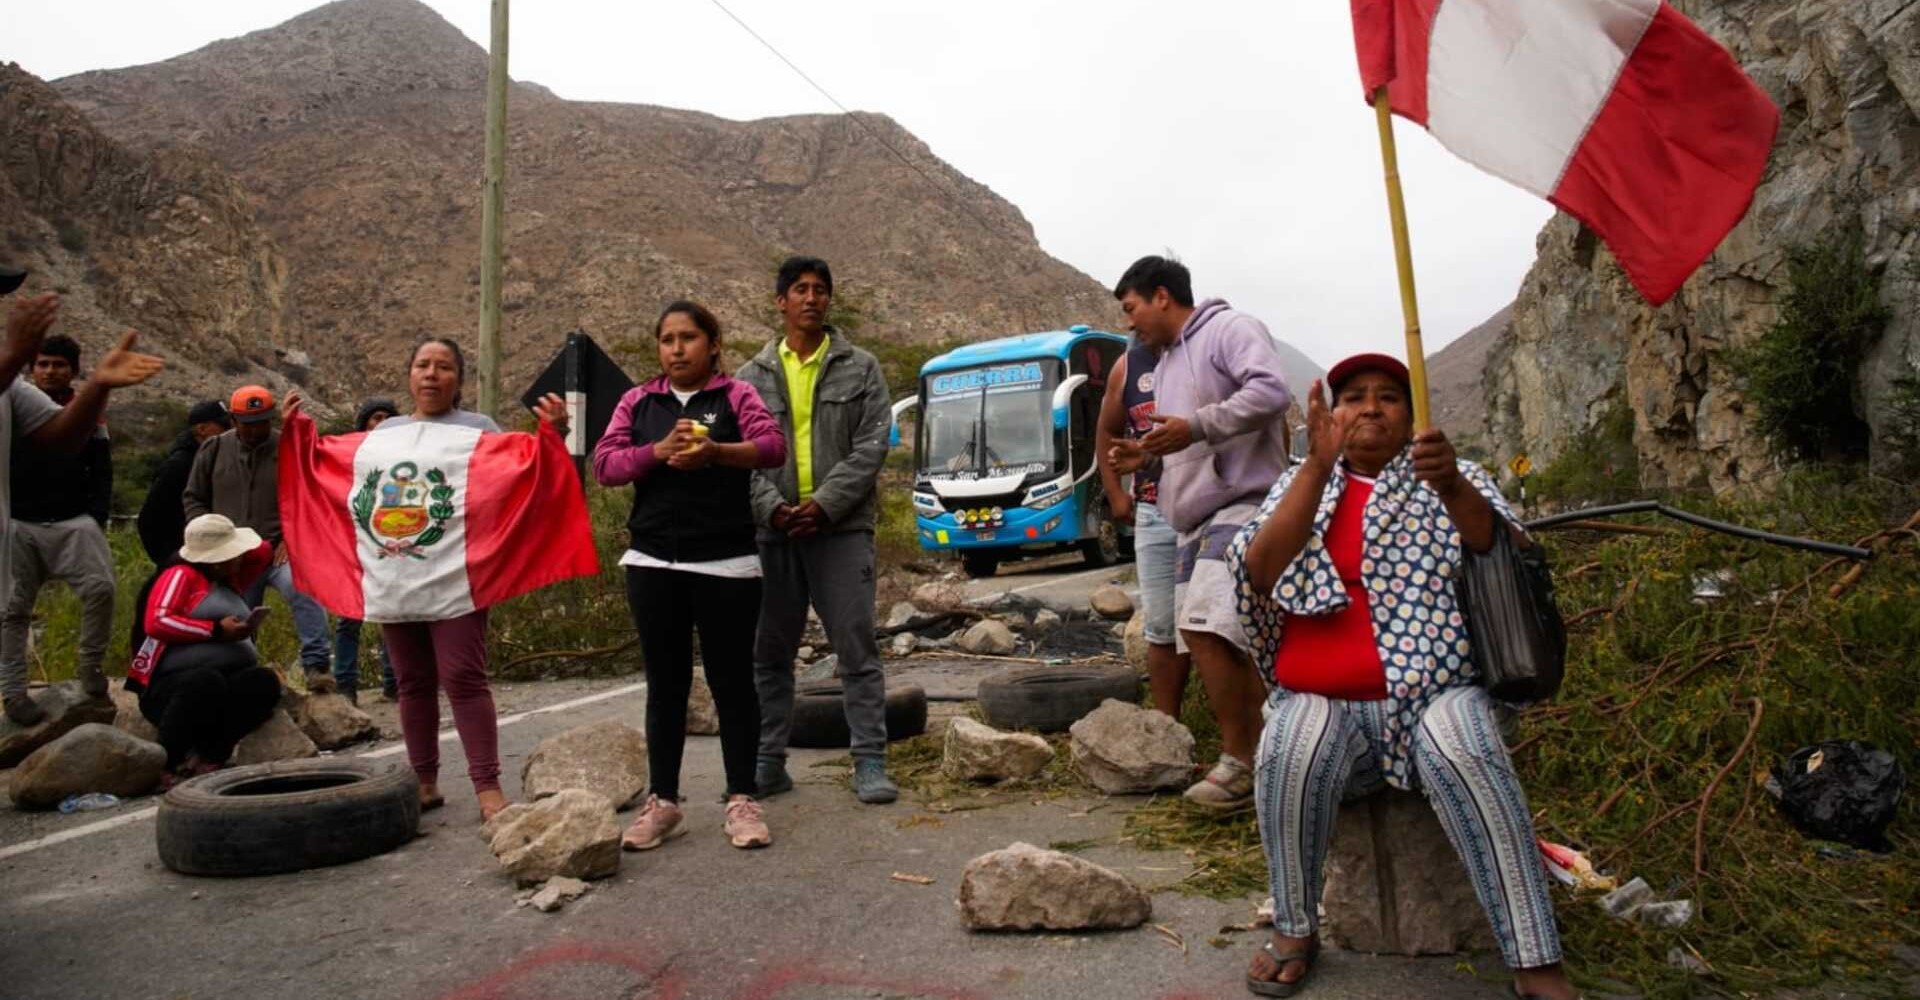 Photo: National strike in Peru, Pativilca-Huaraz highway. Credit: John Commandment